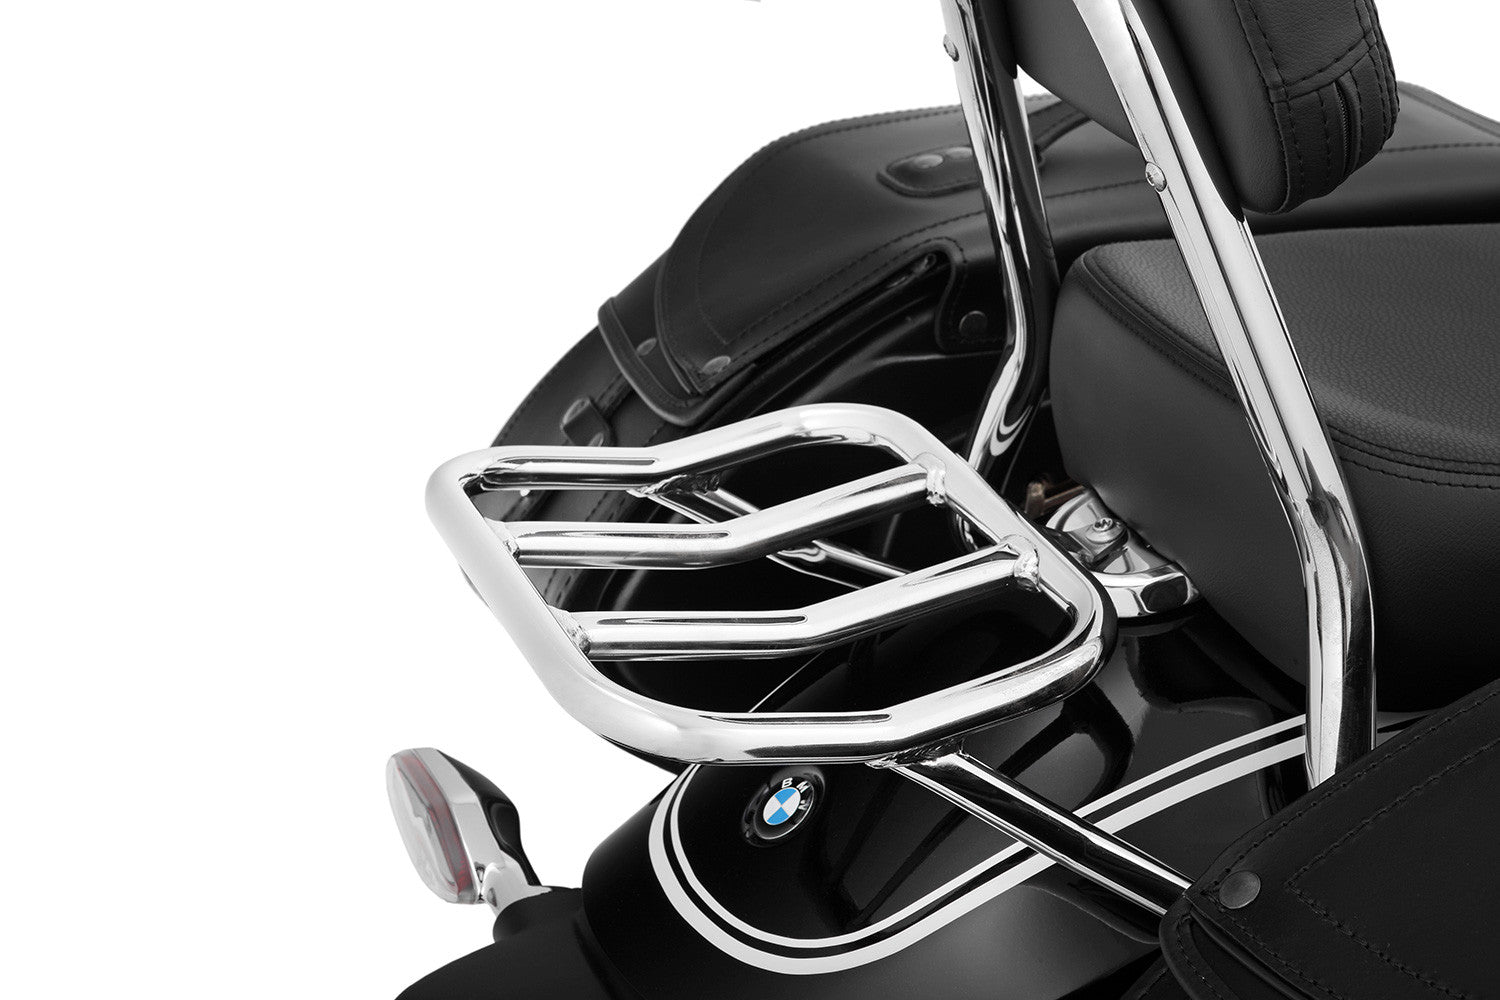 BMW R18 Ergonomics - Rear Luggage Rack